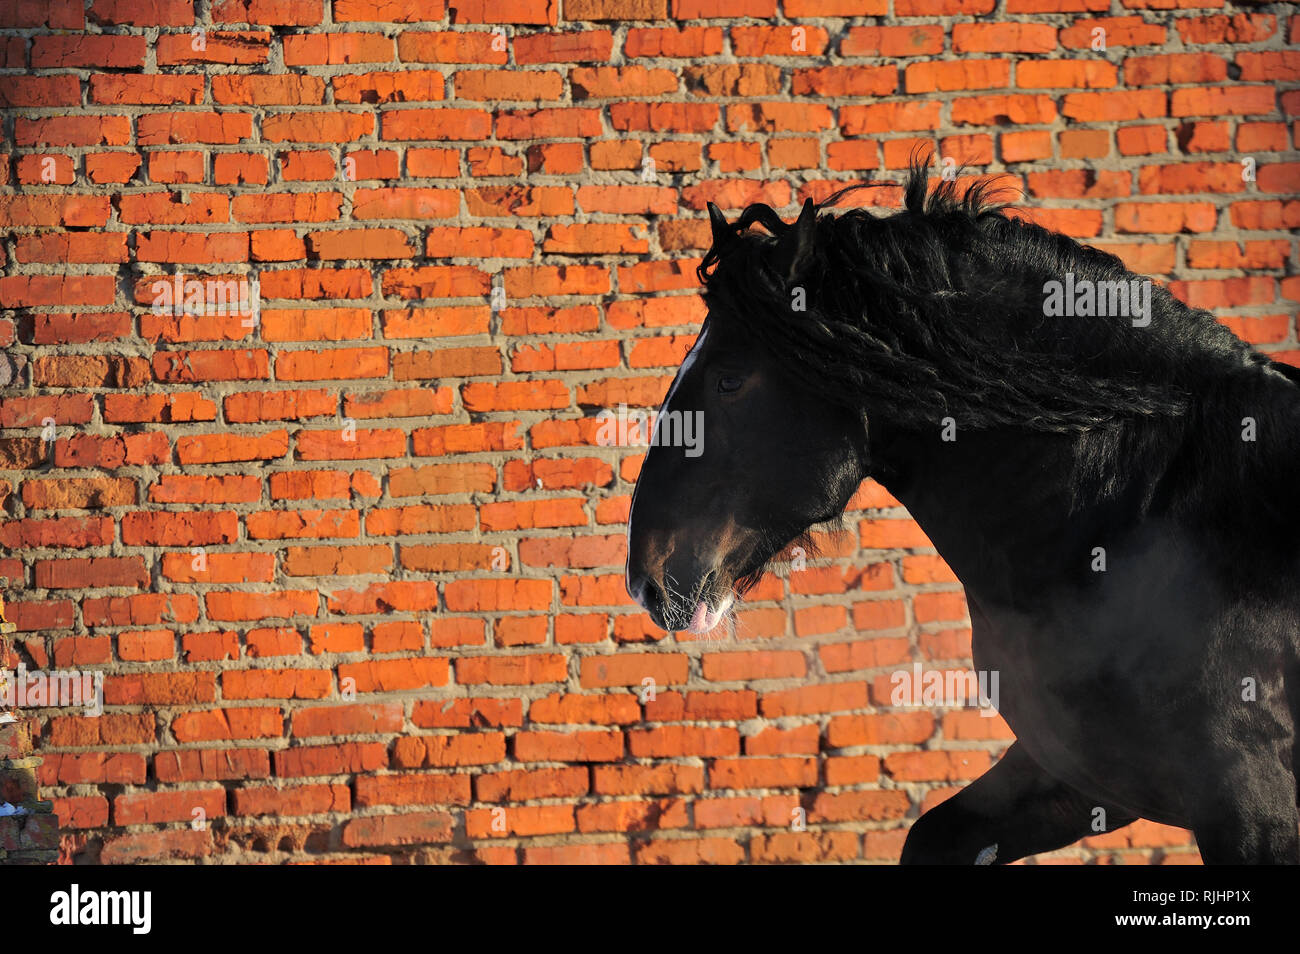 Black Vladimir heavy draft stallion runs along red brick wall in winter. Horizontal, portrait, in motion. Stock Photo